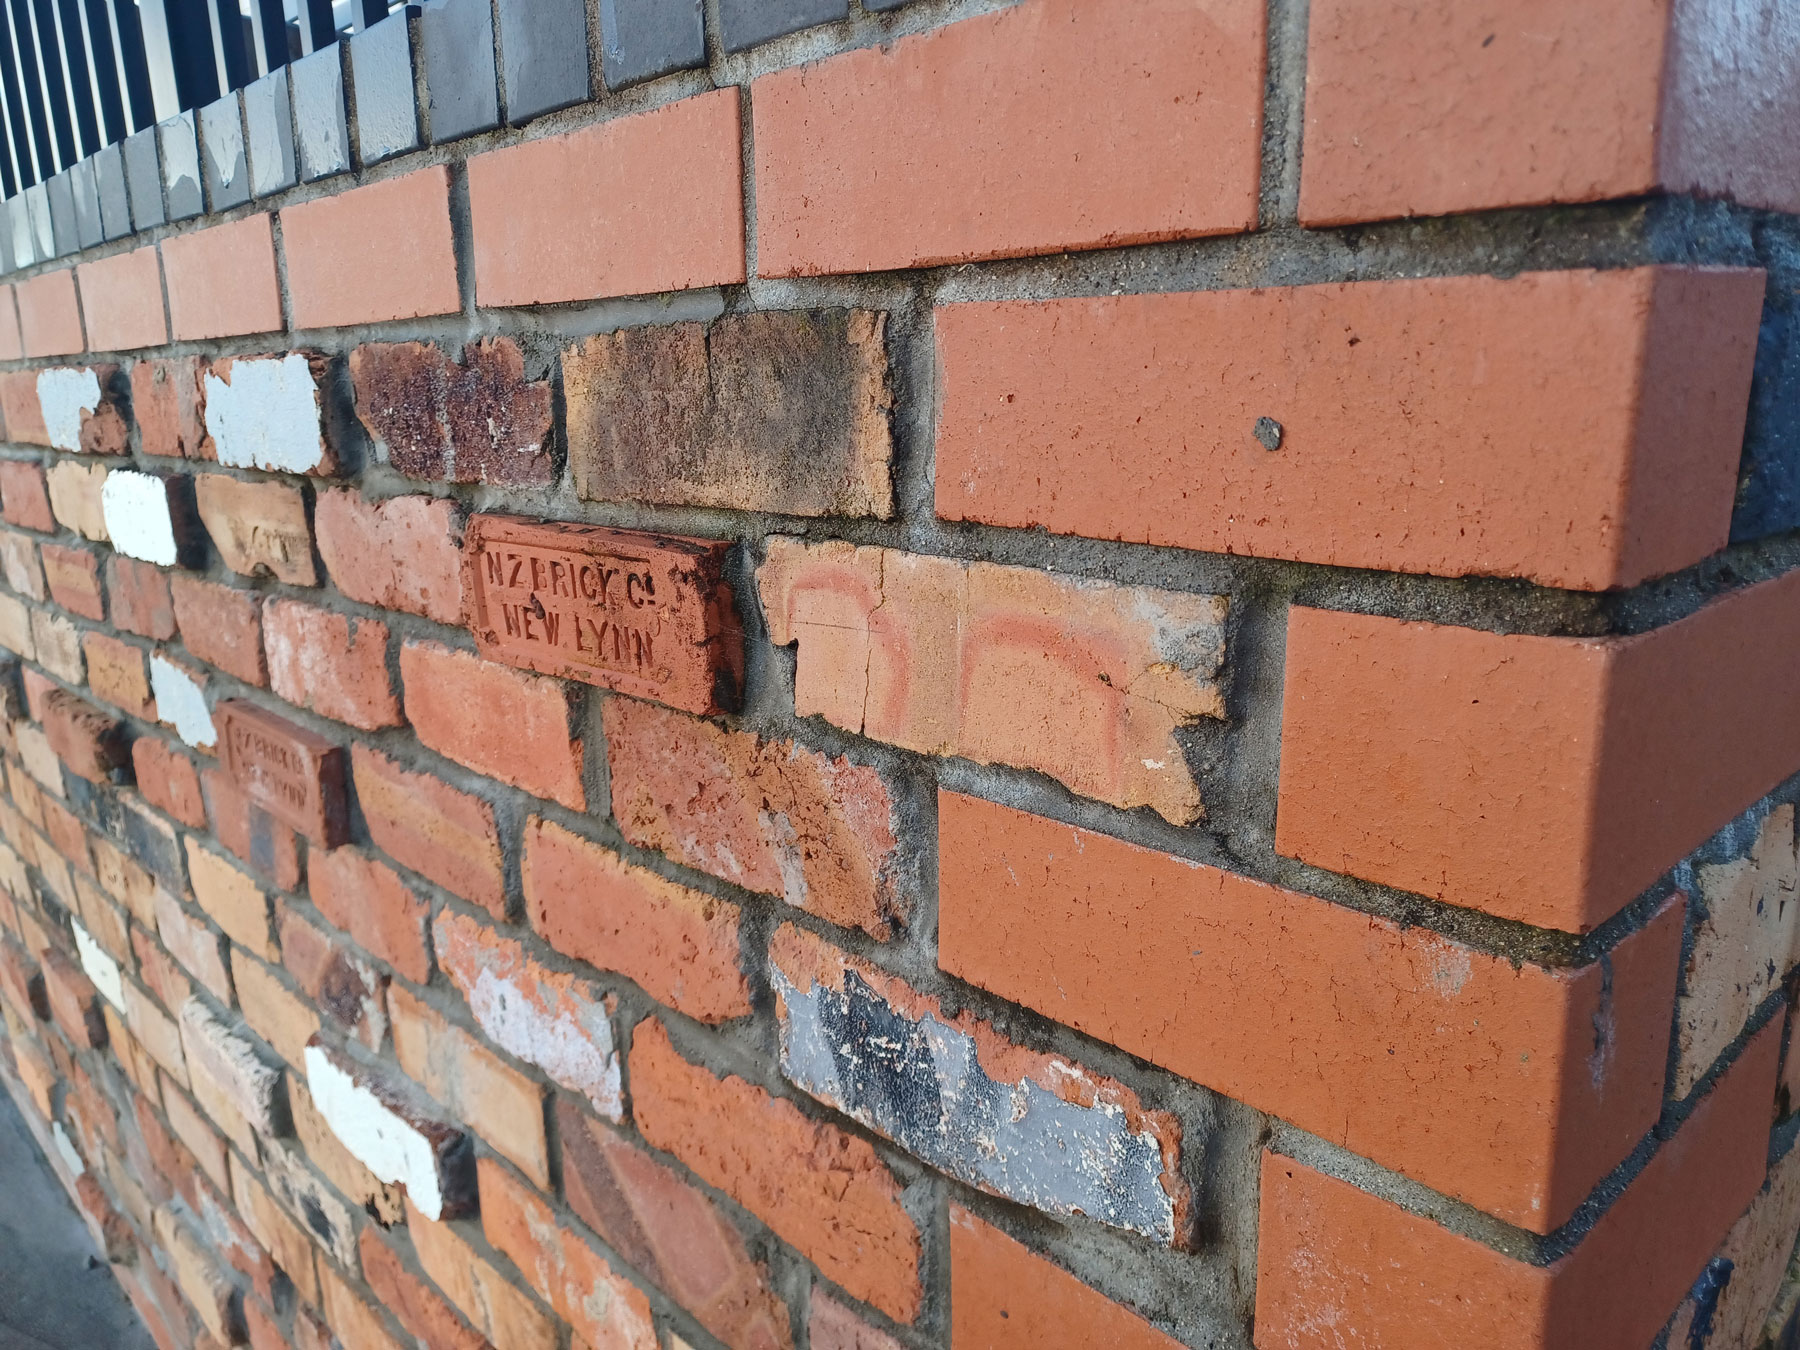 Crown Lyn brick retaining wall